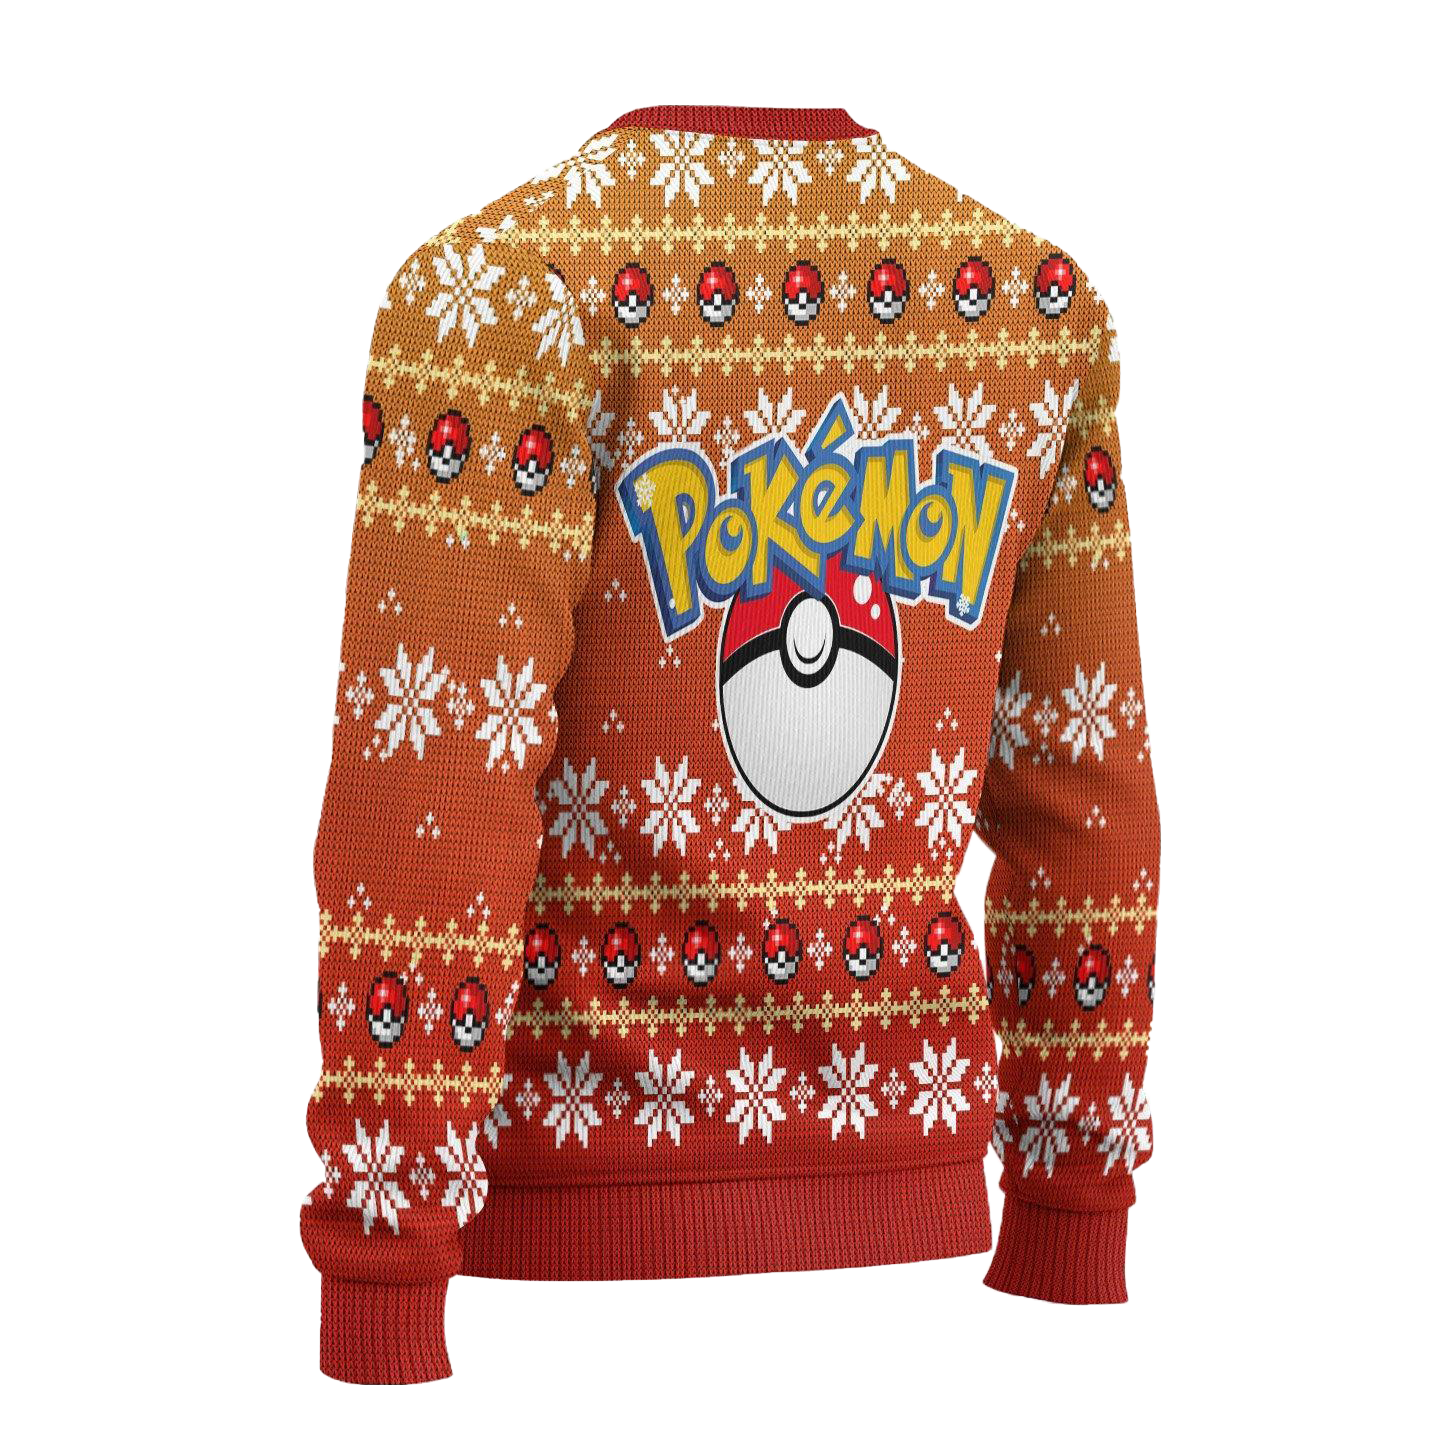 Pokemon Charizard Anime Ugly Christmas Sweater Xmas Gift